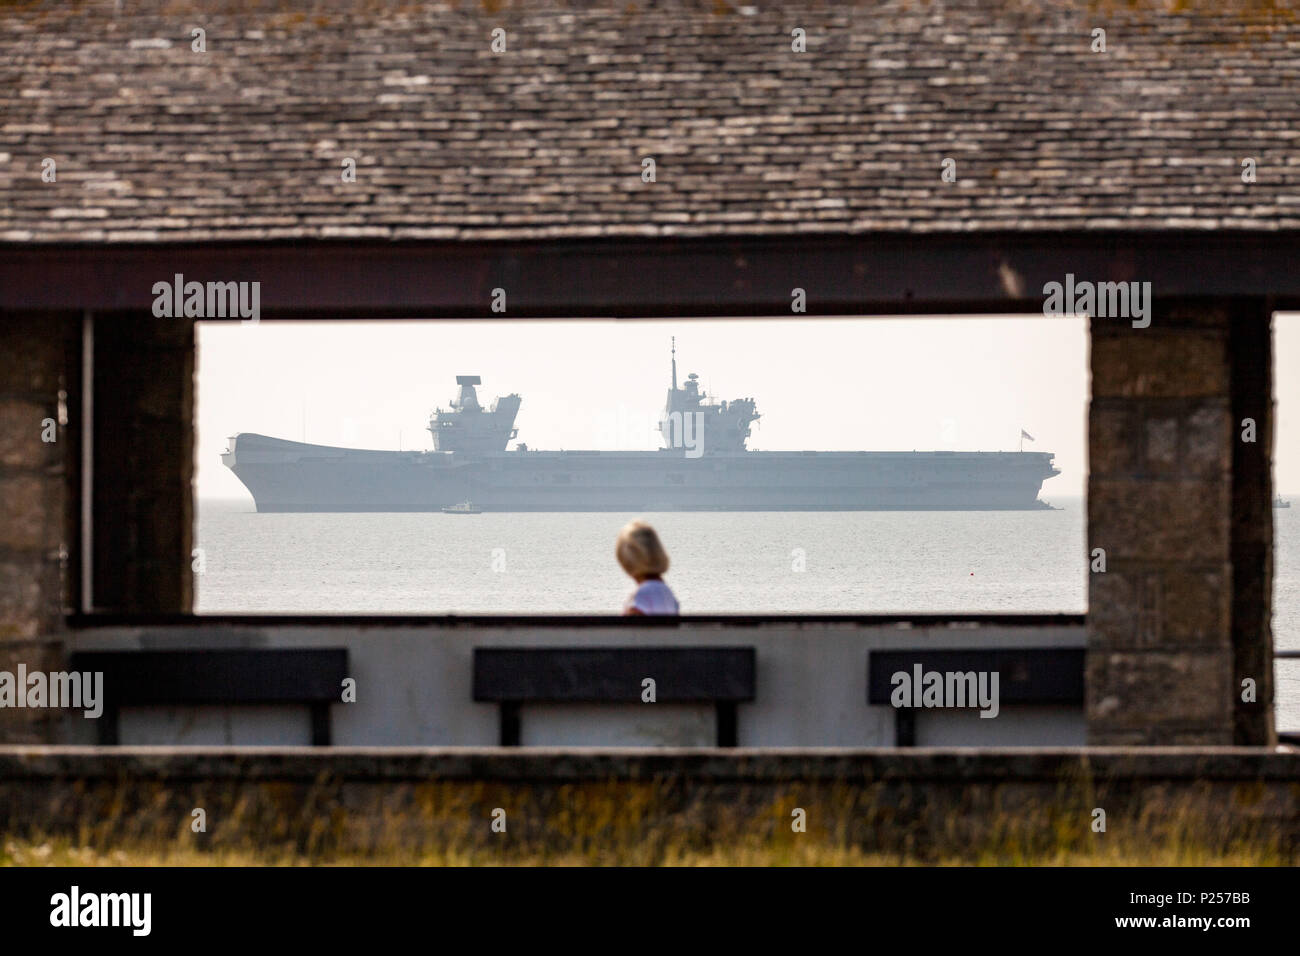 Portaerei HMS Queen Elizabeth visite Penzance in Mount's Bay, Cornwall Foto Stock